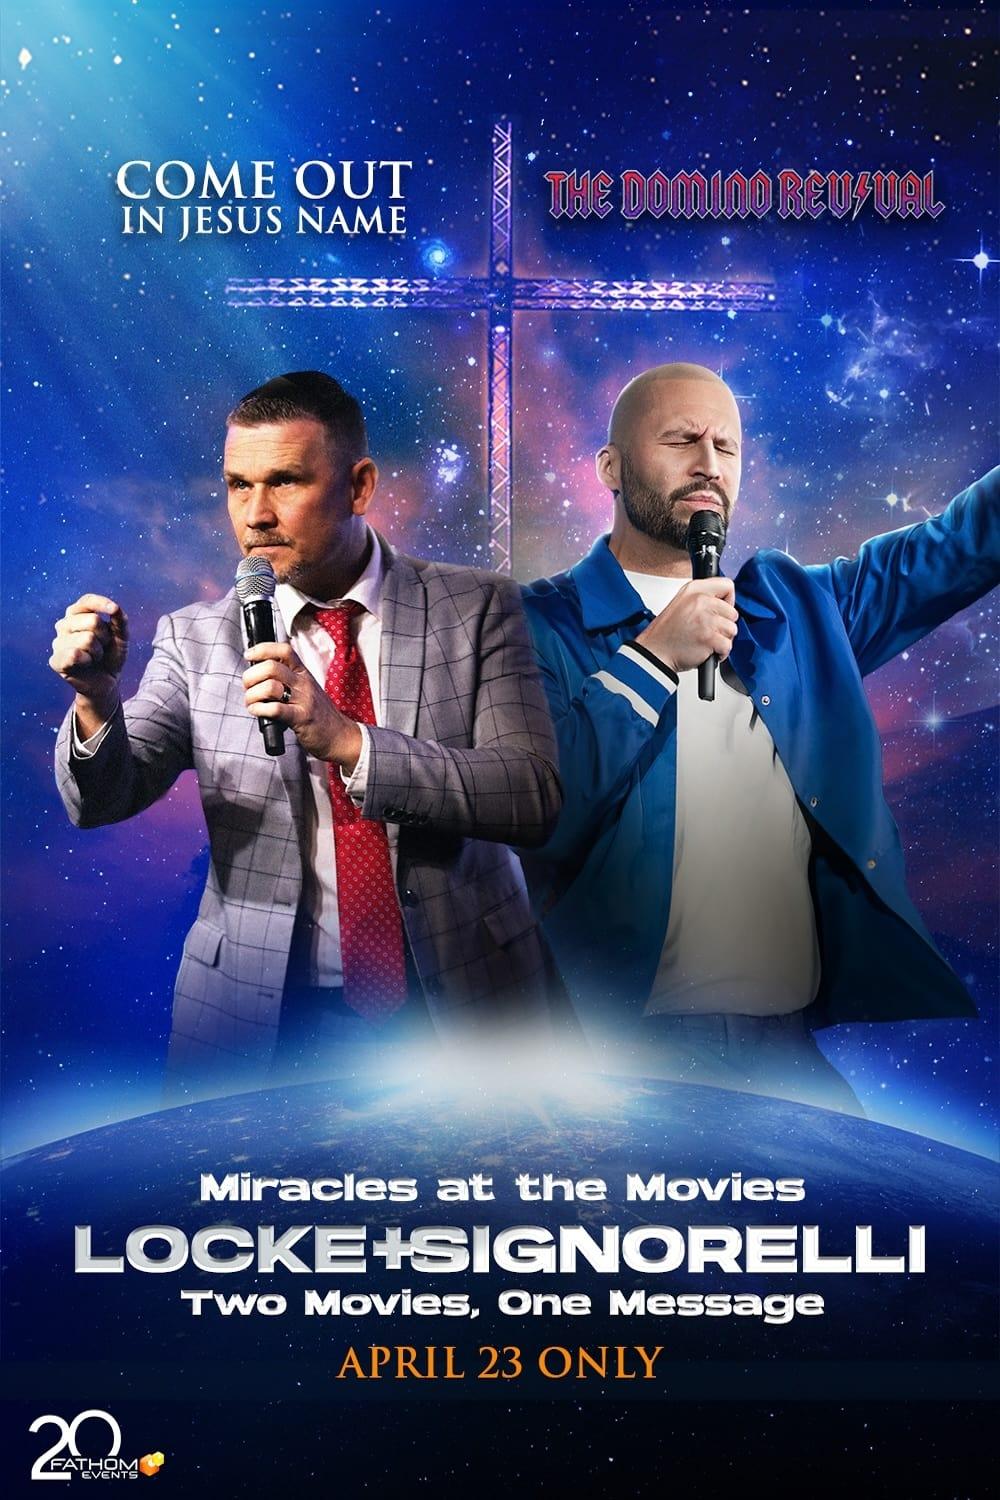 Miracles at the Movies: Locke + Signorelli poster